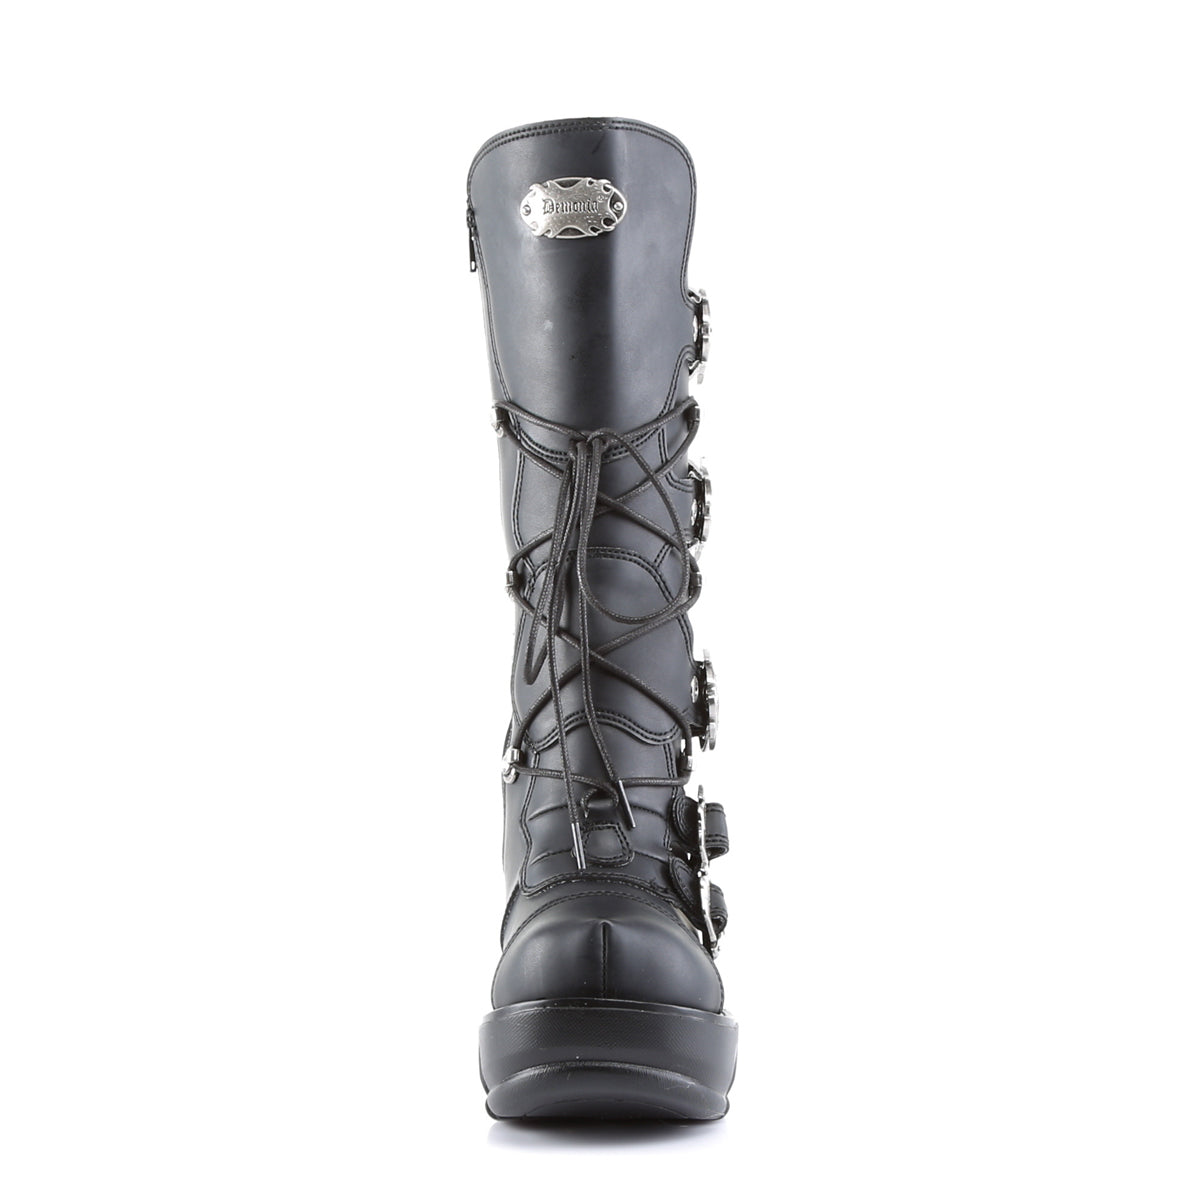 SINISTER-203 Black Vegan Leather Calf Boot Demonia